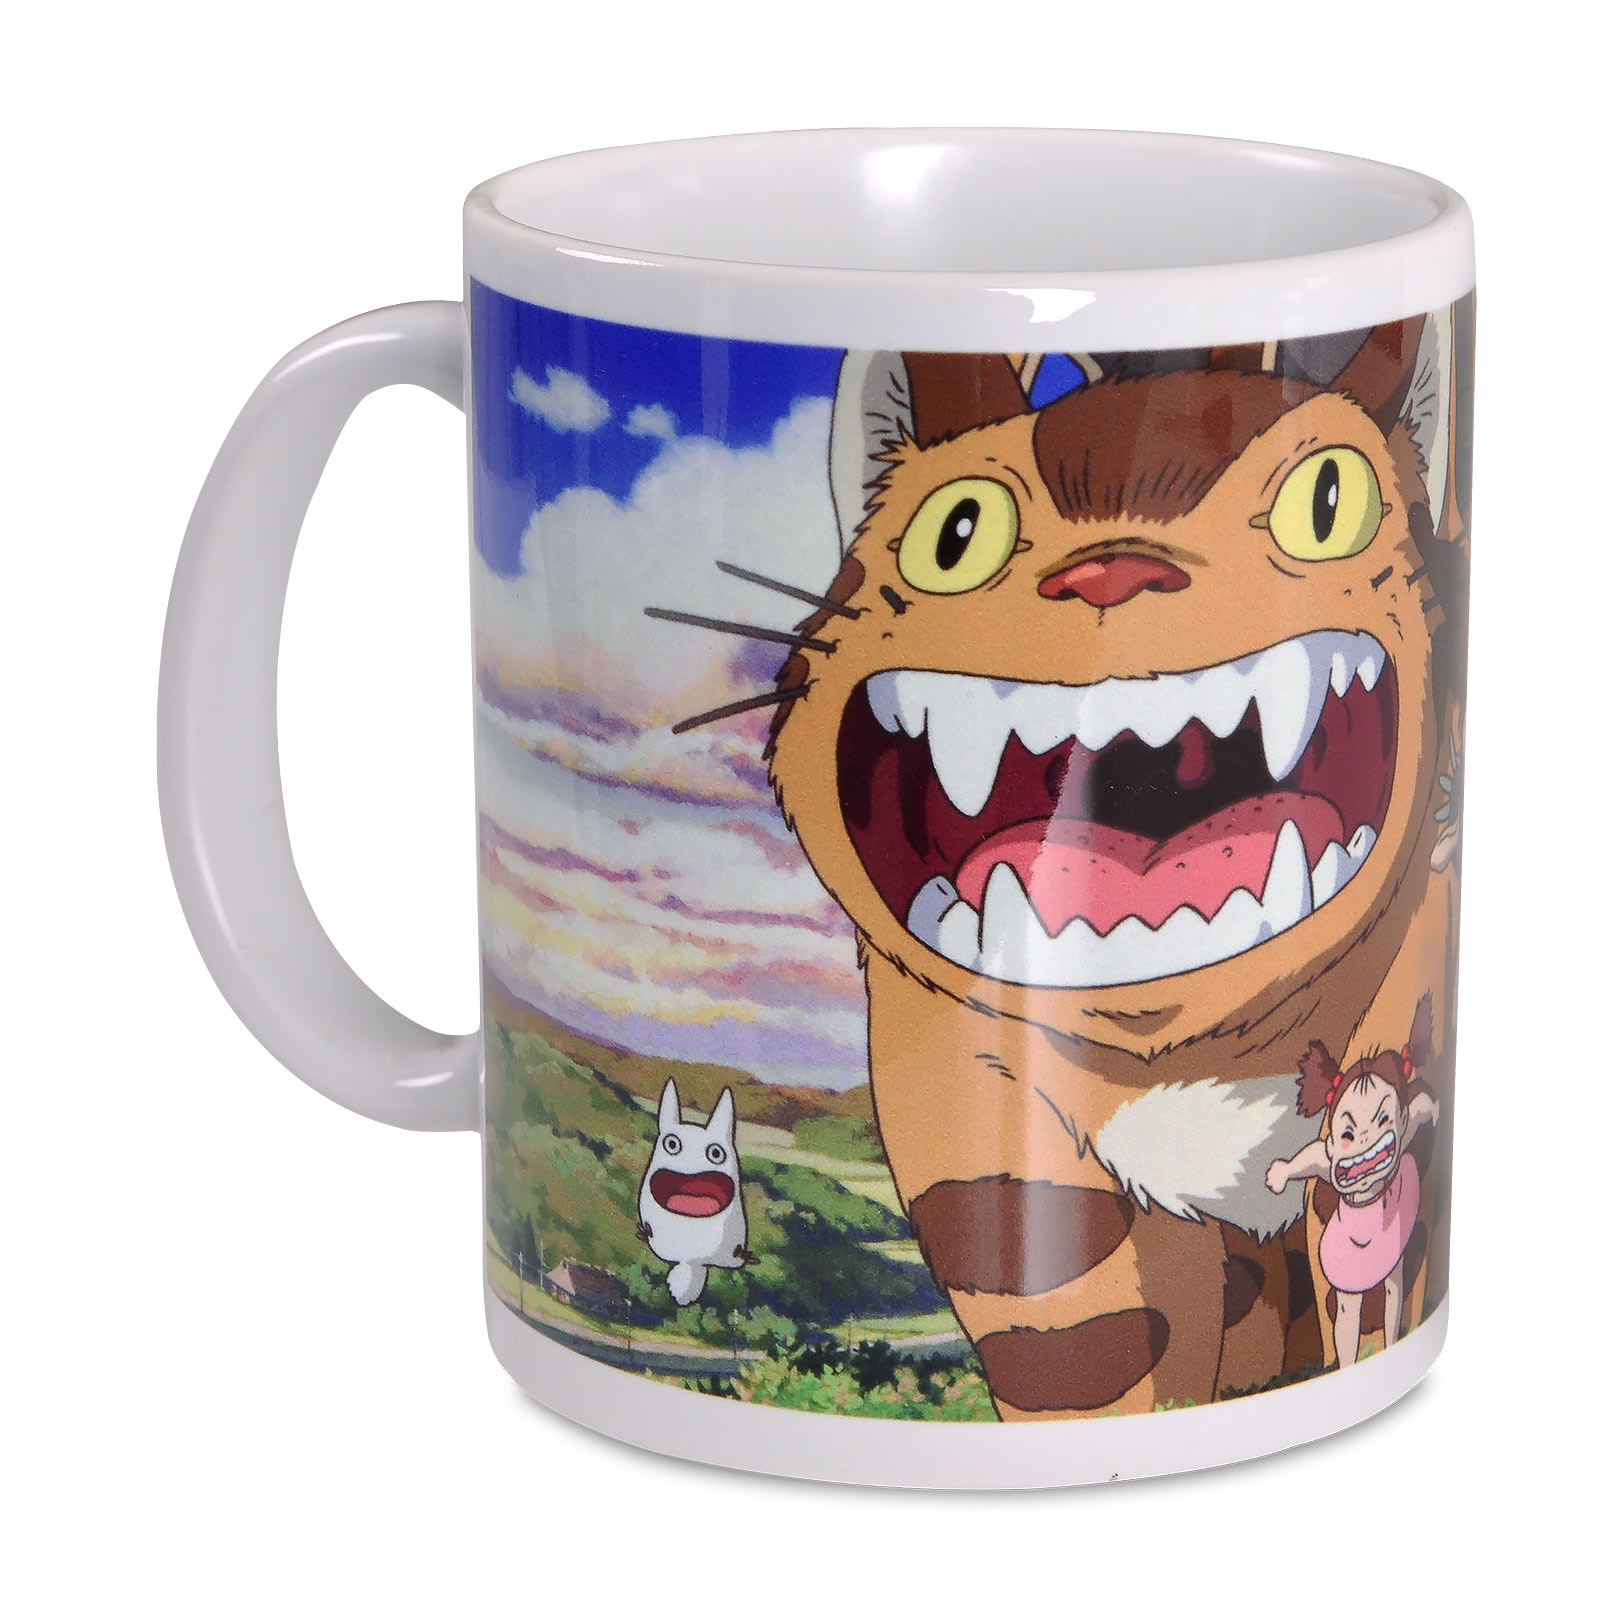 Totoro & Catbus Mug